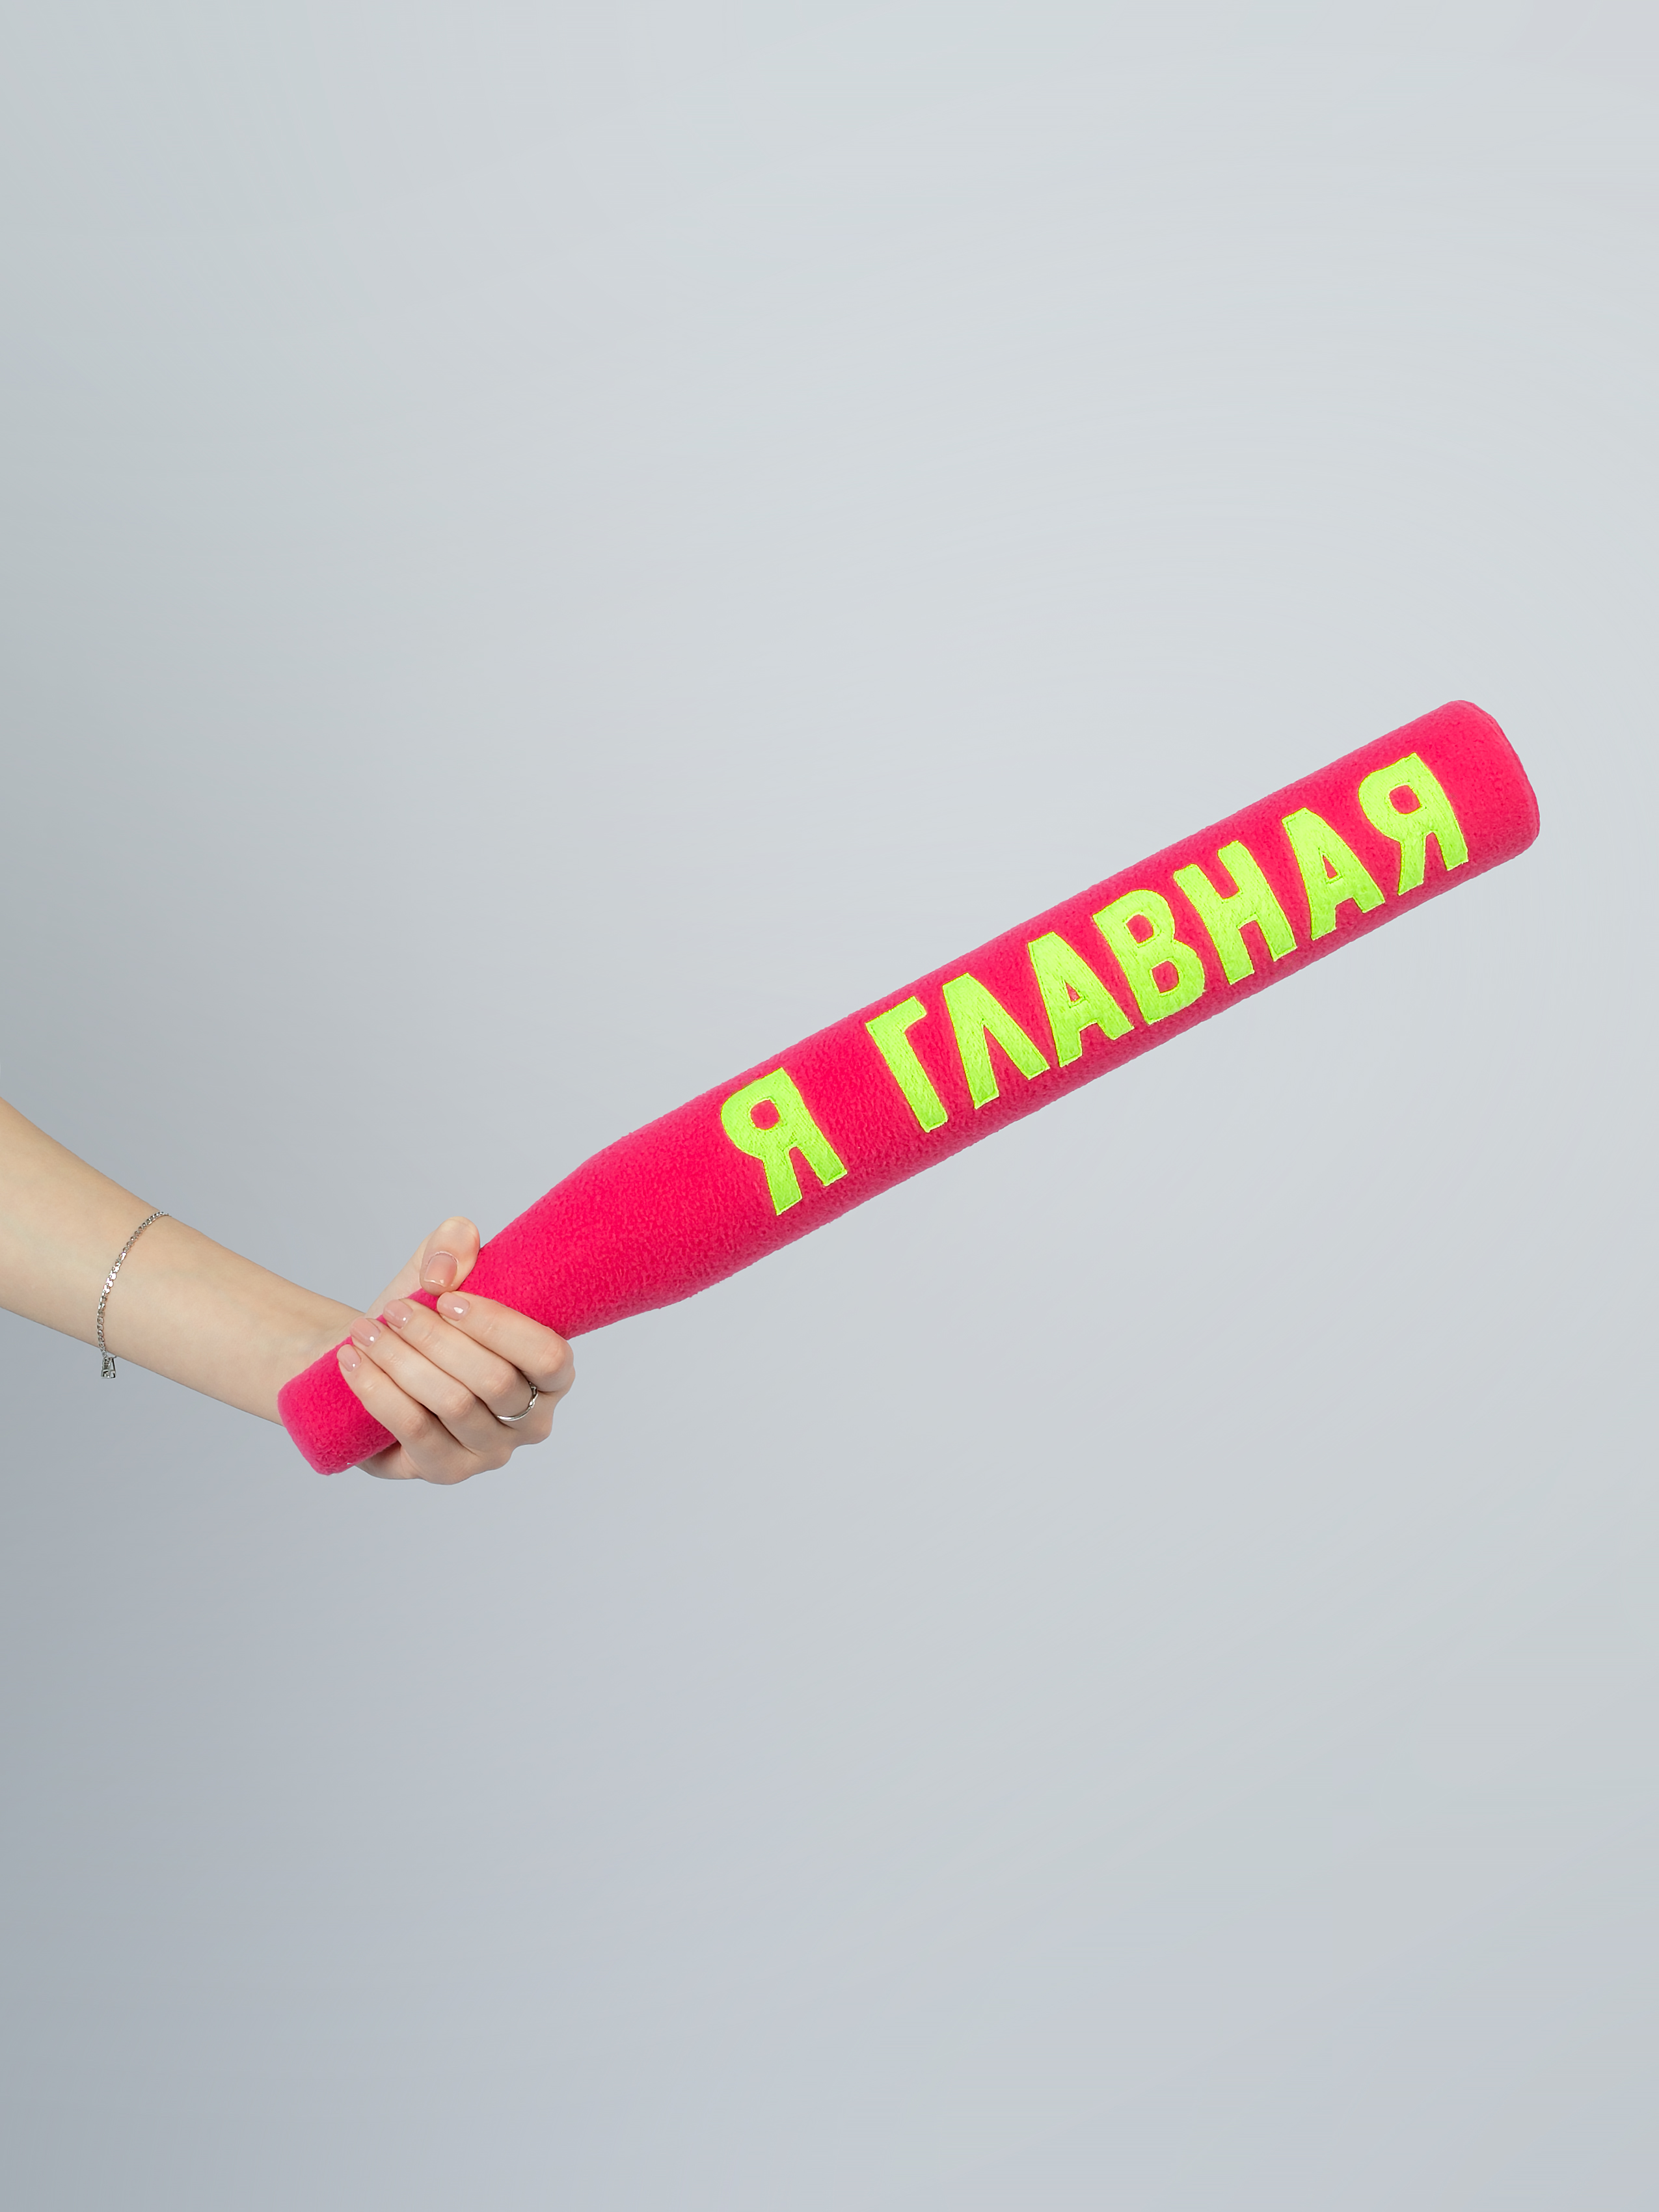 Мягкая бейсбольная бита антистресс с надписью, Plysense, Розовая, 80 см.